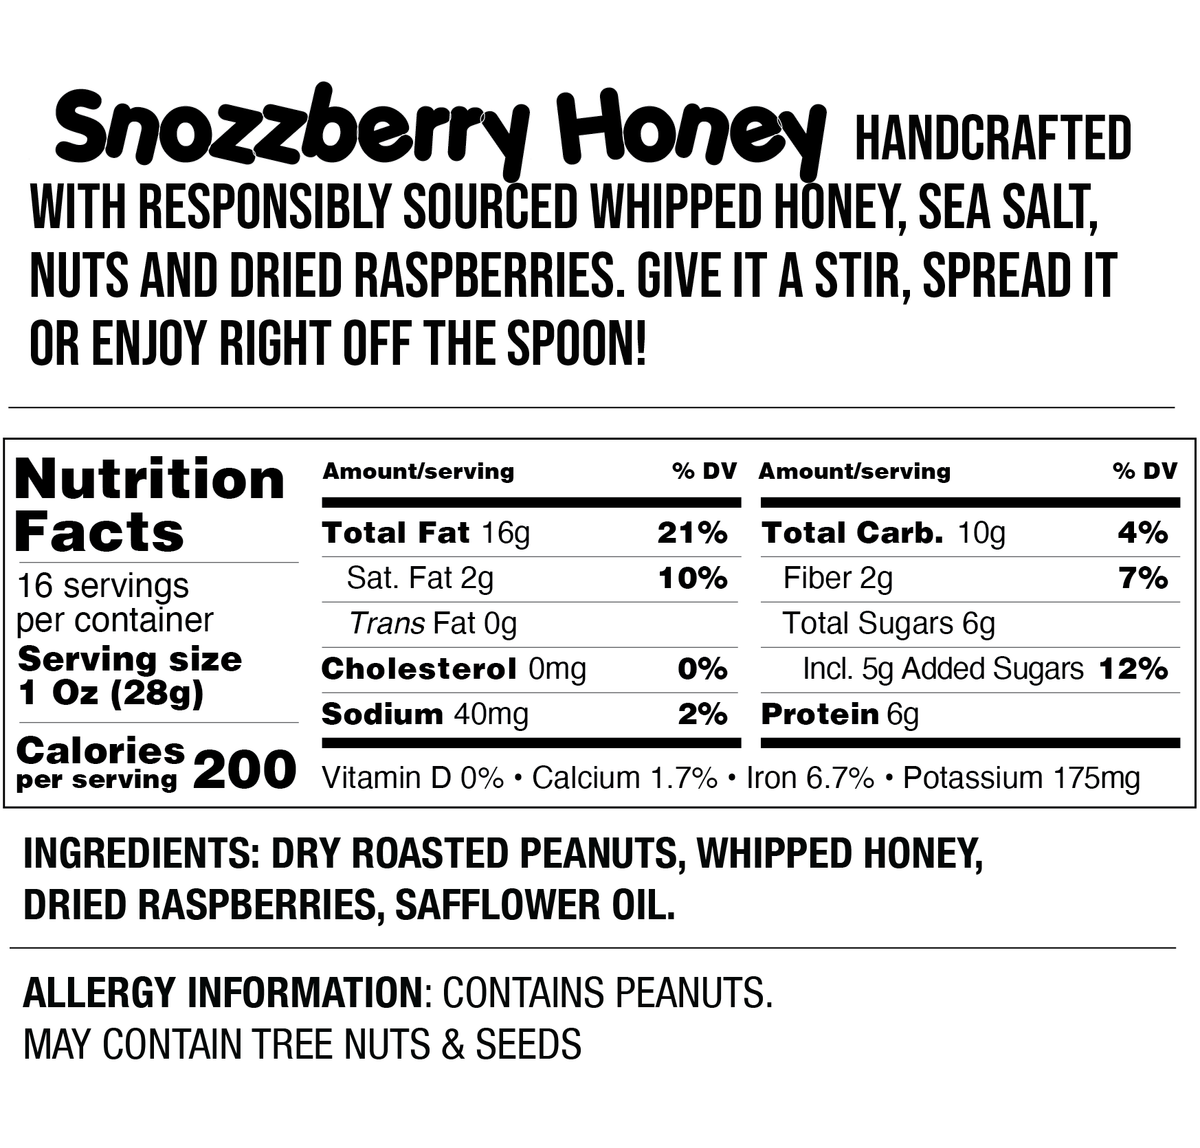 Snozzberry Honey - Fokken Nuts